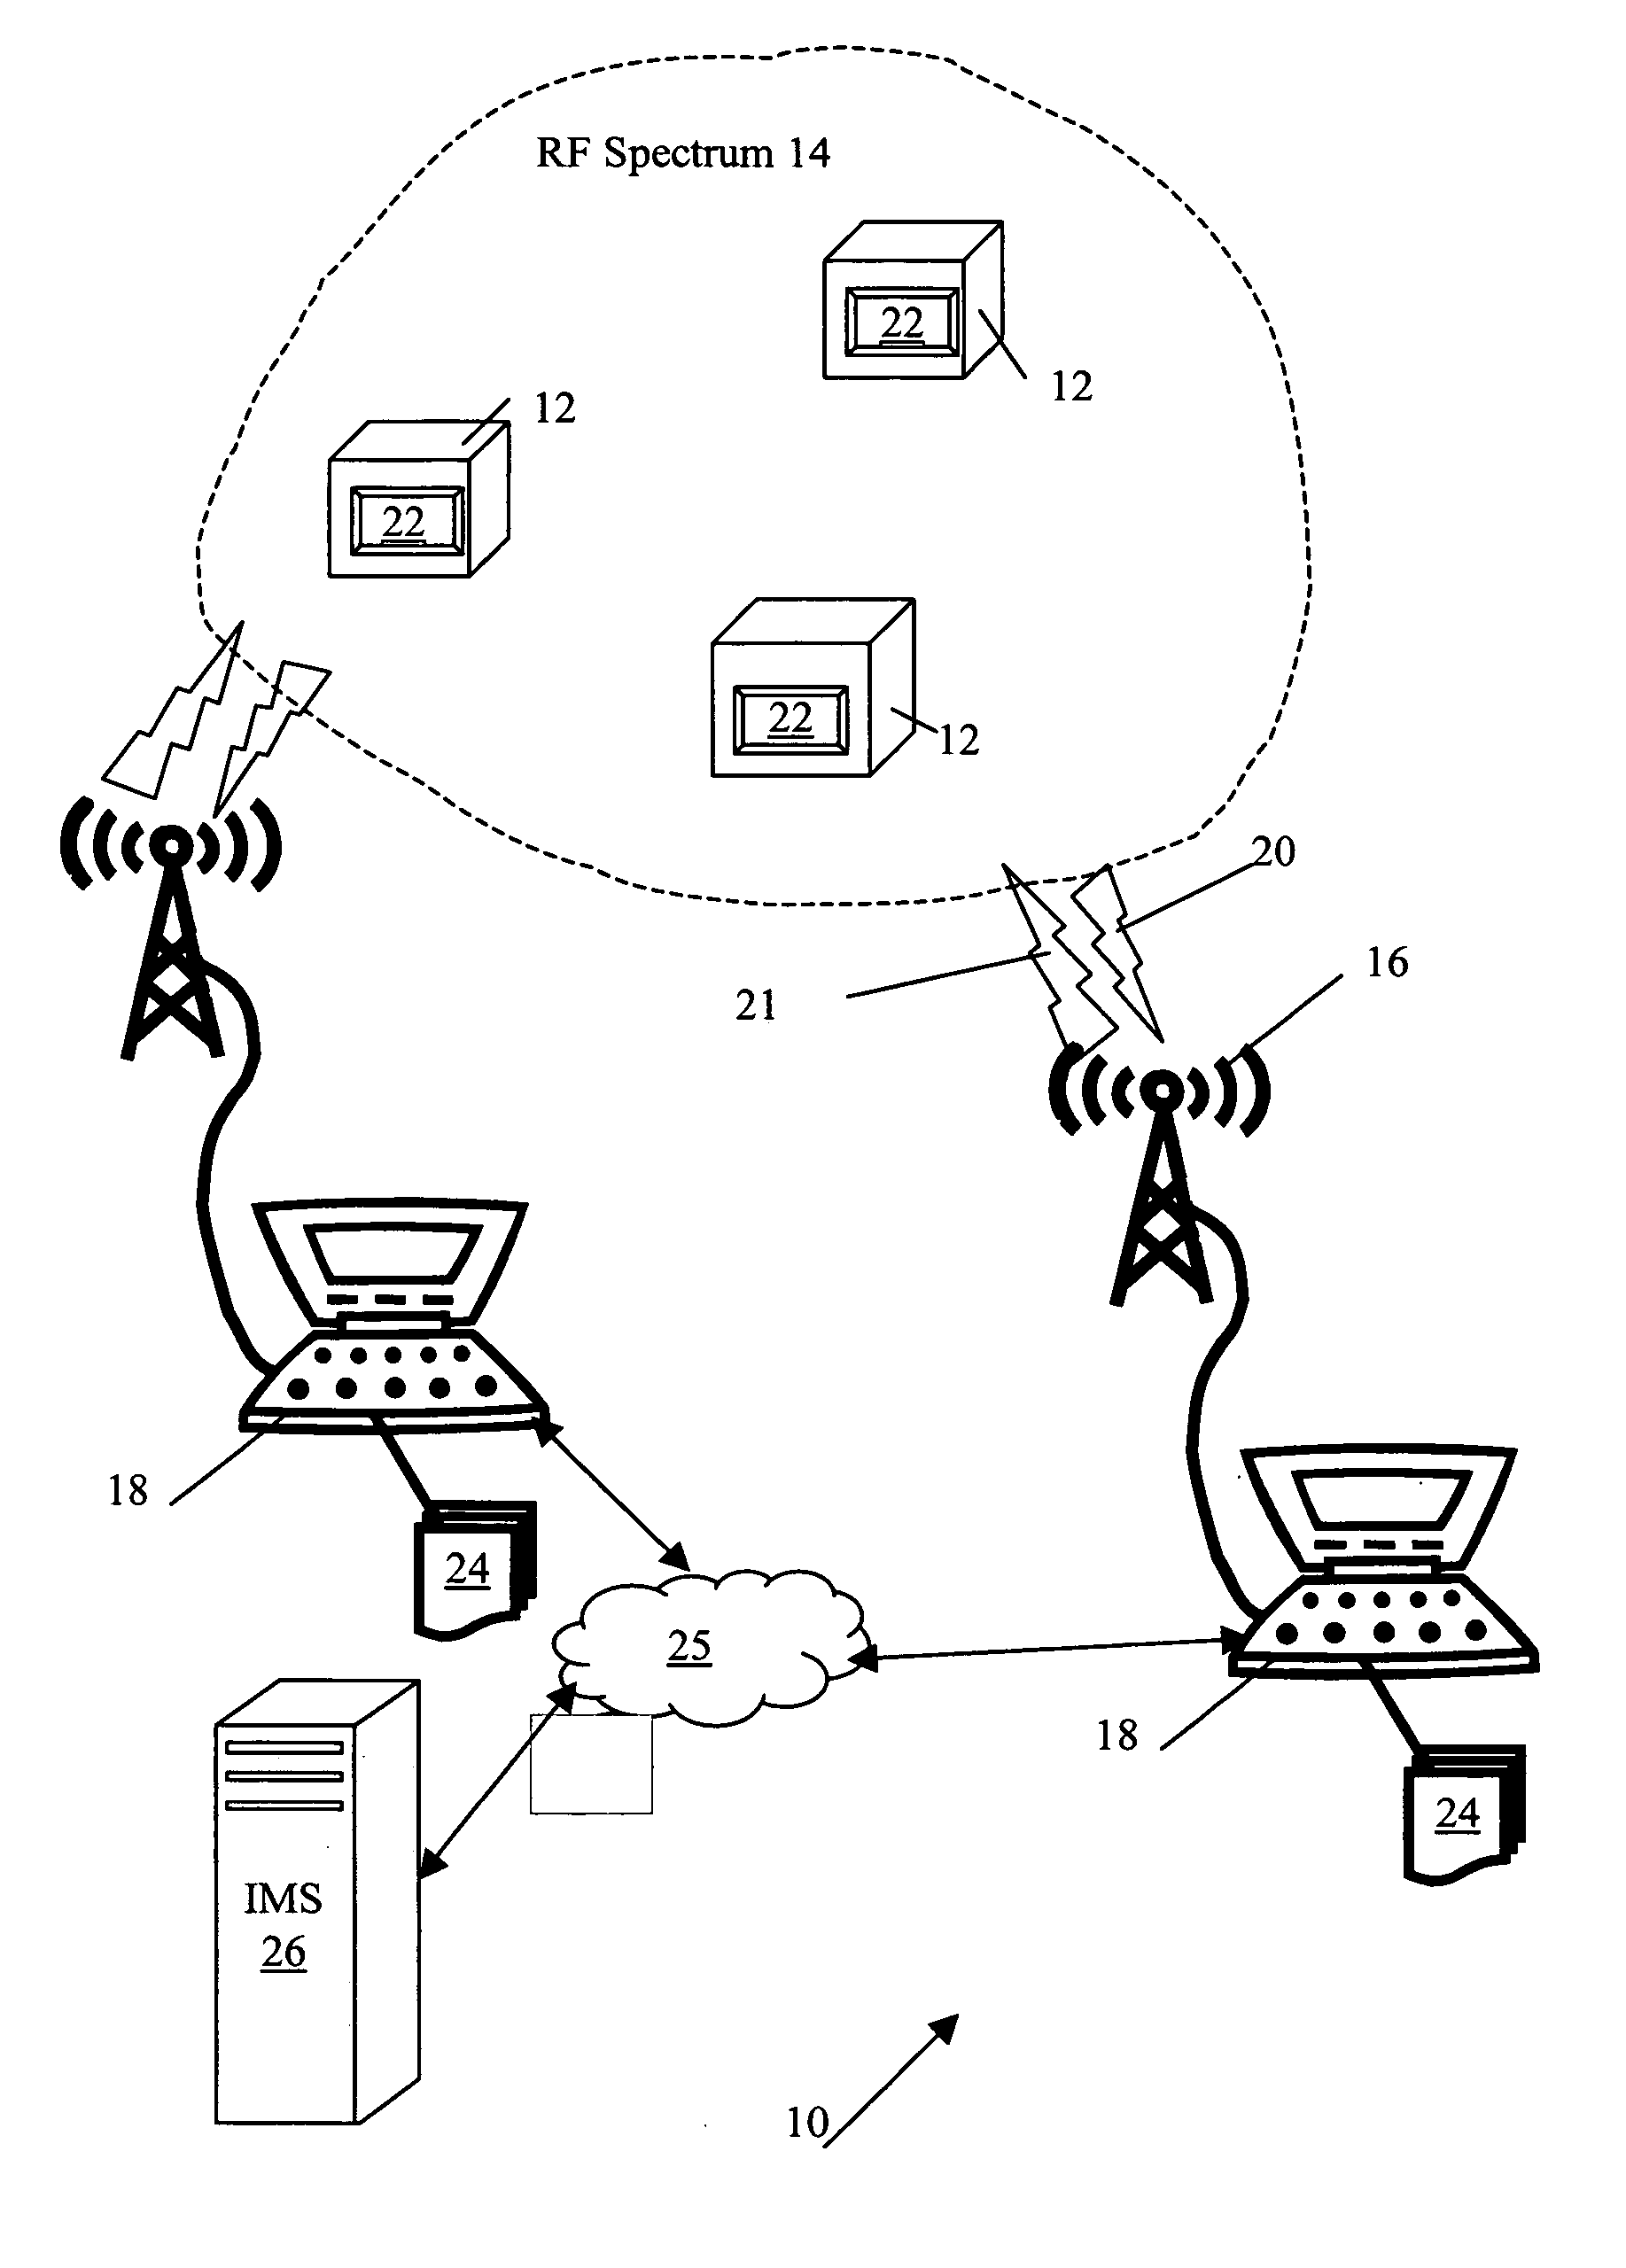 System and method for a RFID transponder file system